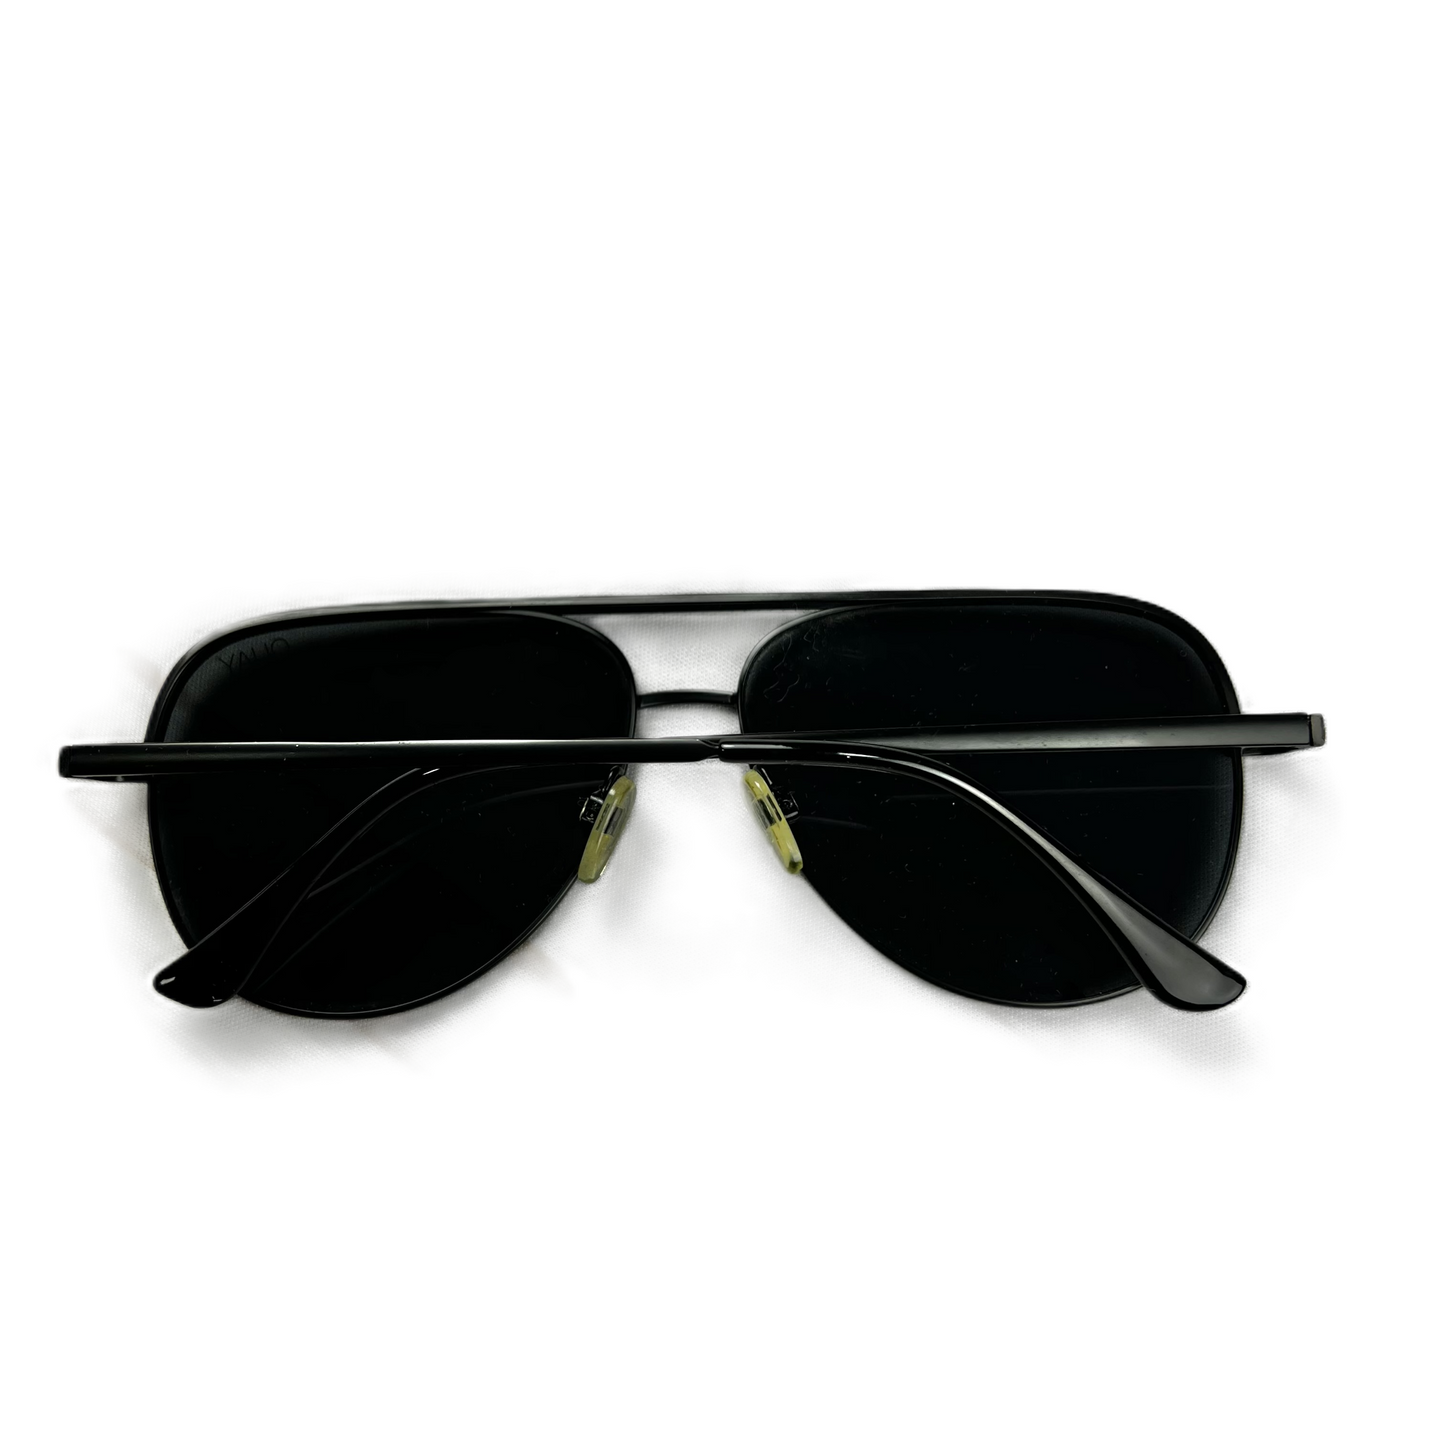 Sunglasses By Quay